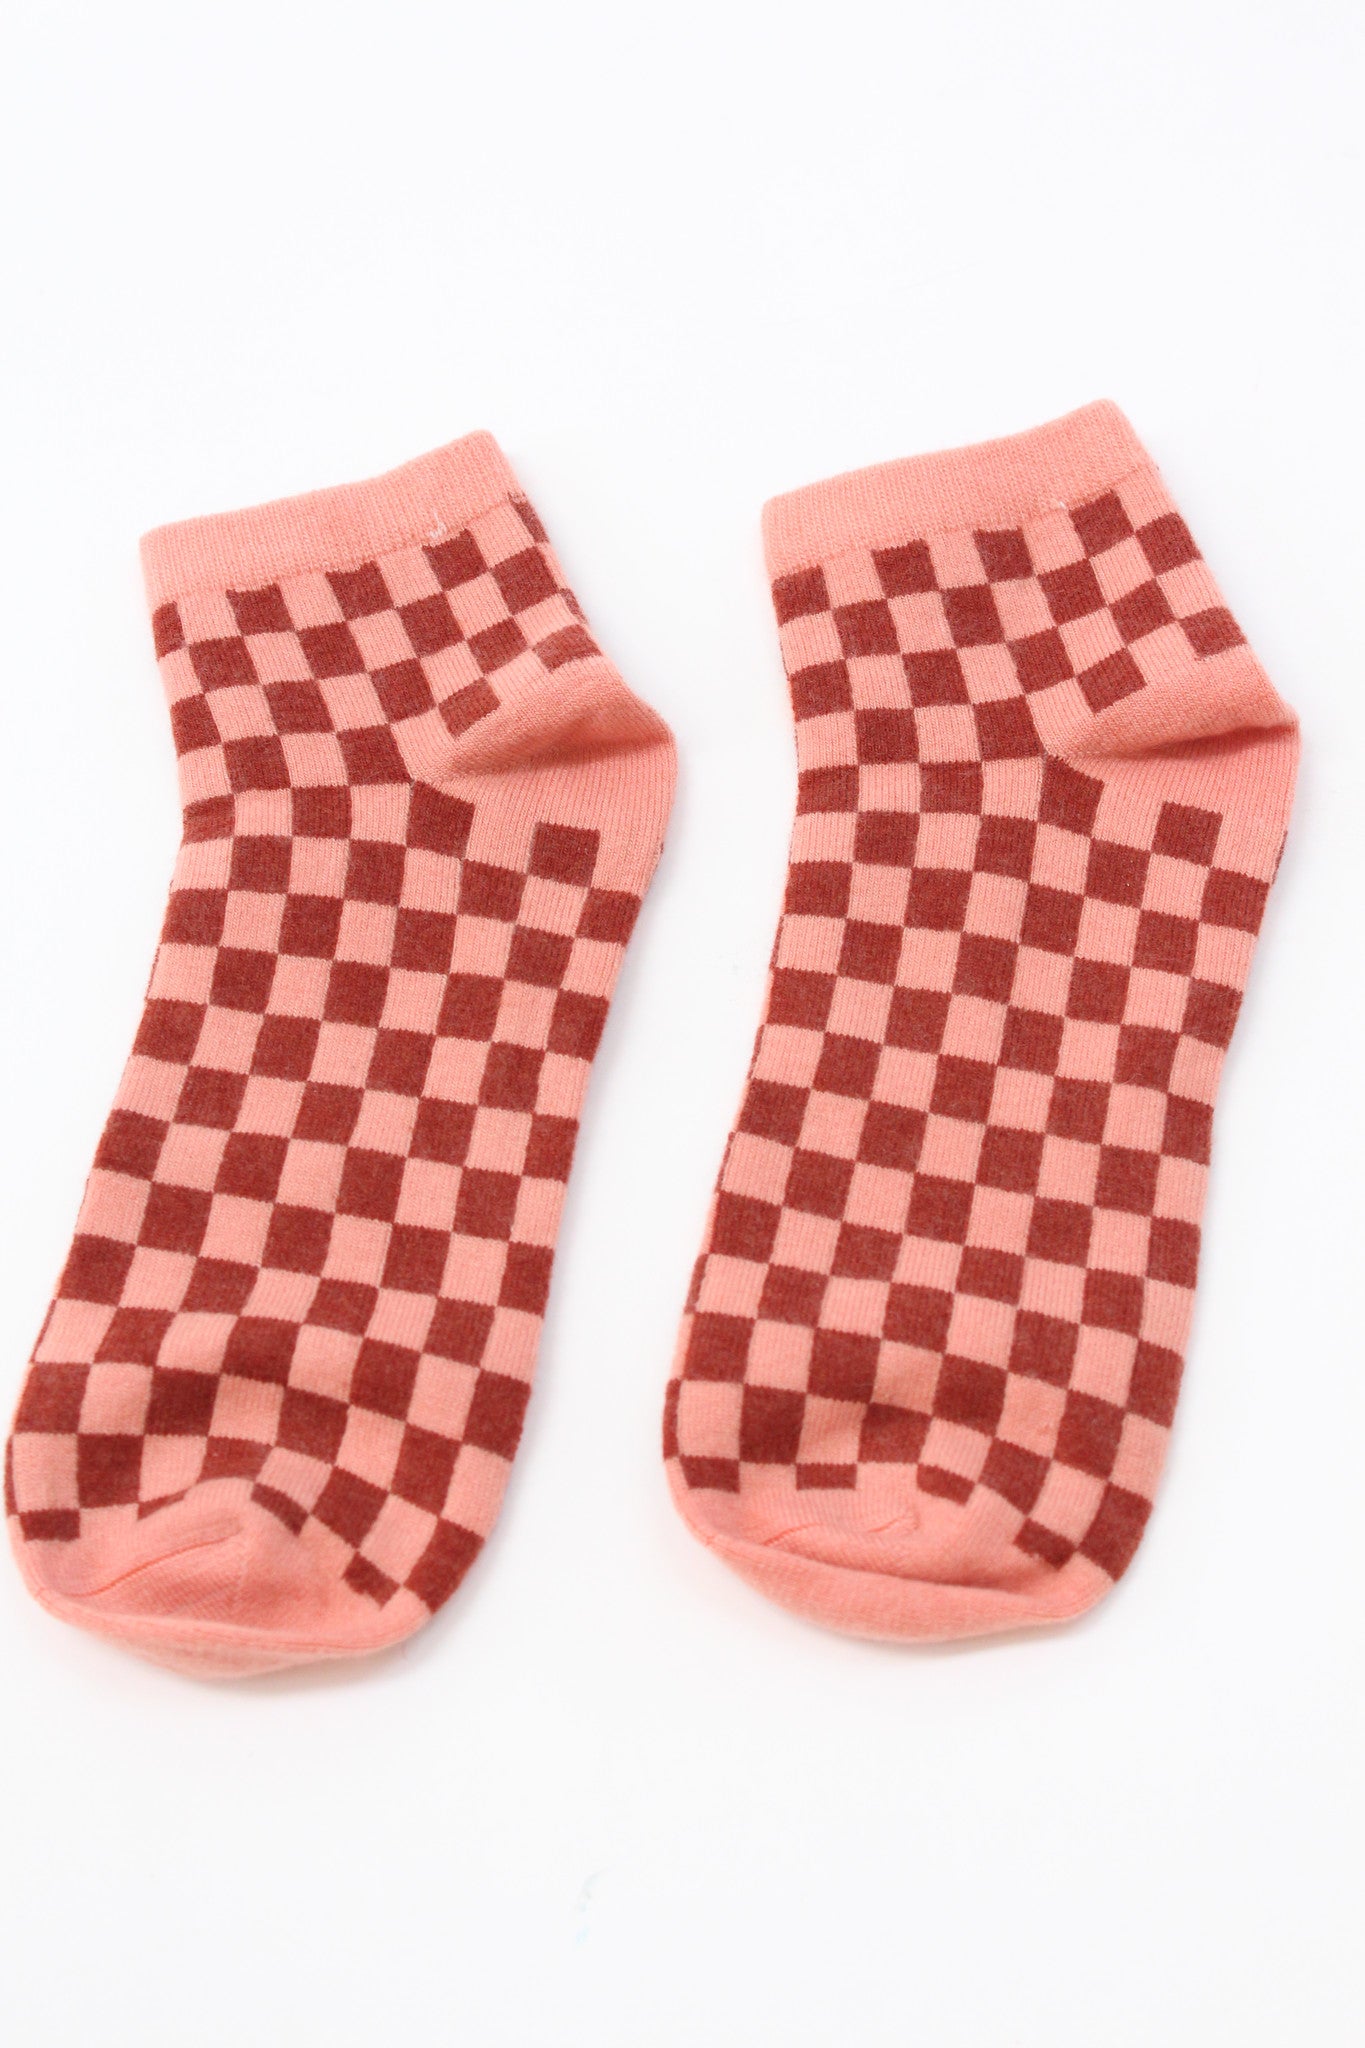 Beklina Cashmere Socks Checkerboard